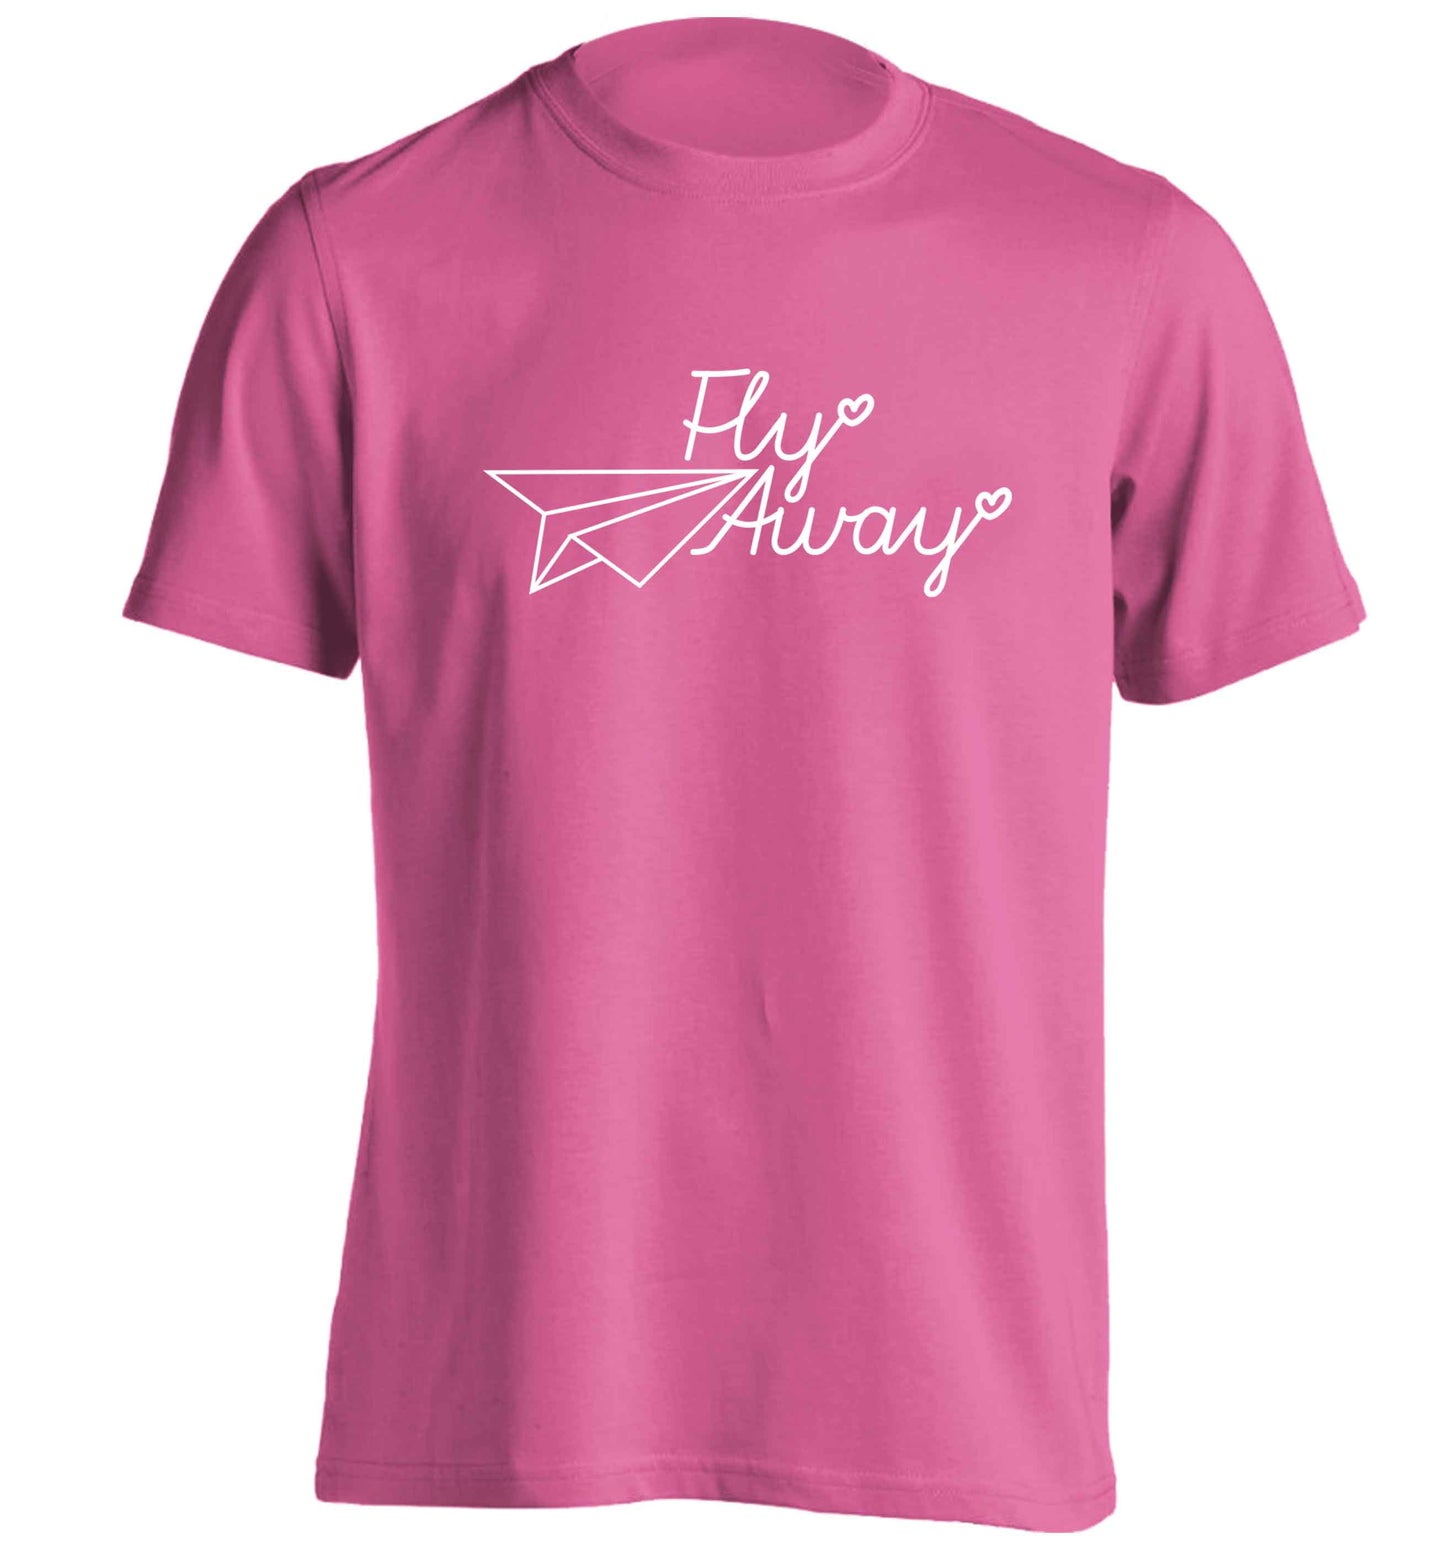 Fly away adults unisex pink Tshirt 2XL